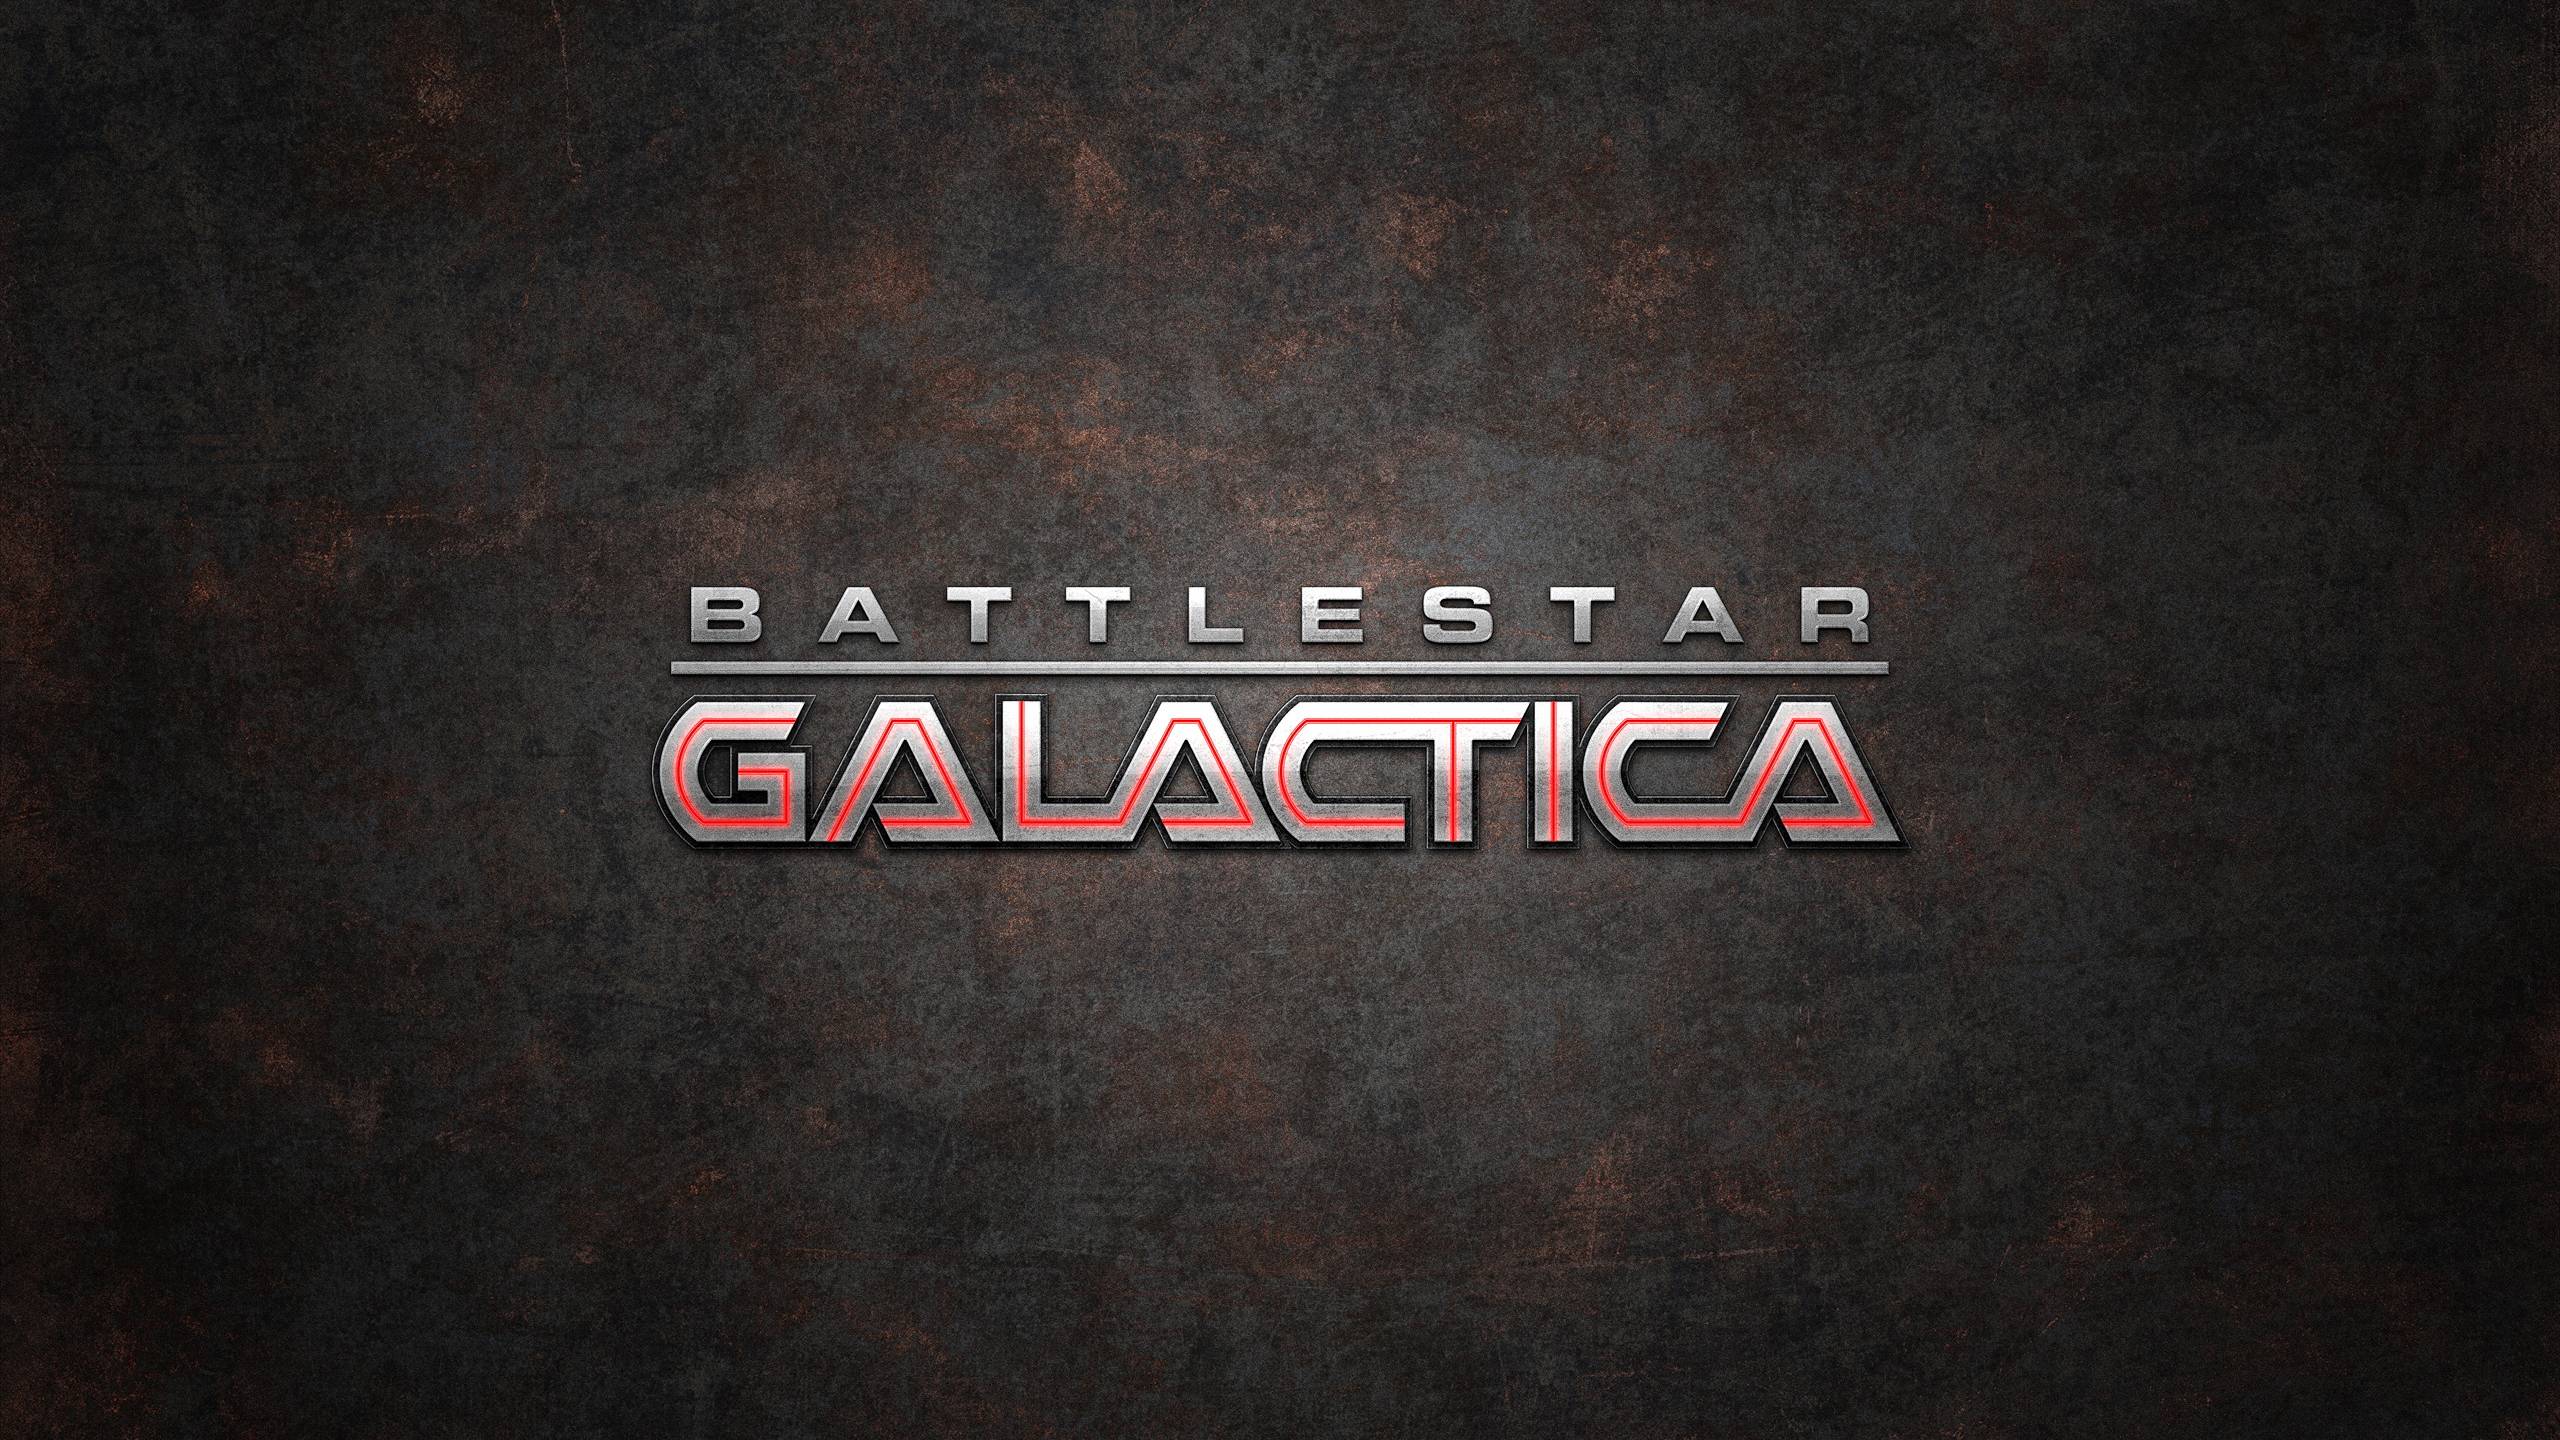 310342 descargar imagen series de televisión, battlestar galáctica (2003), battlestar galactica: fondos de pantalla y protectores de pantalla gratis